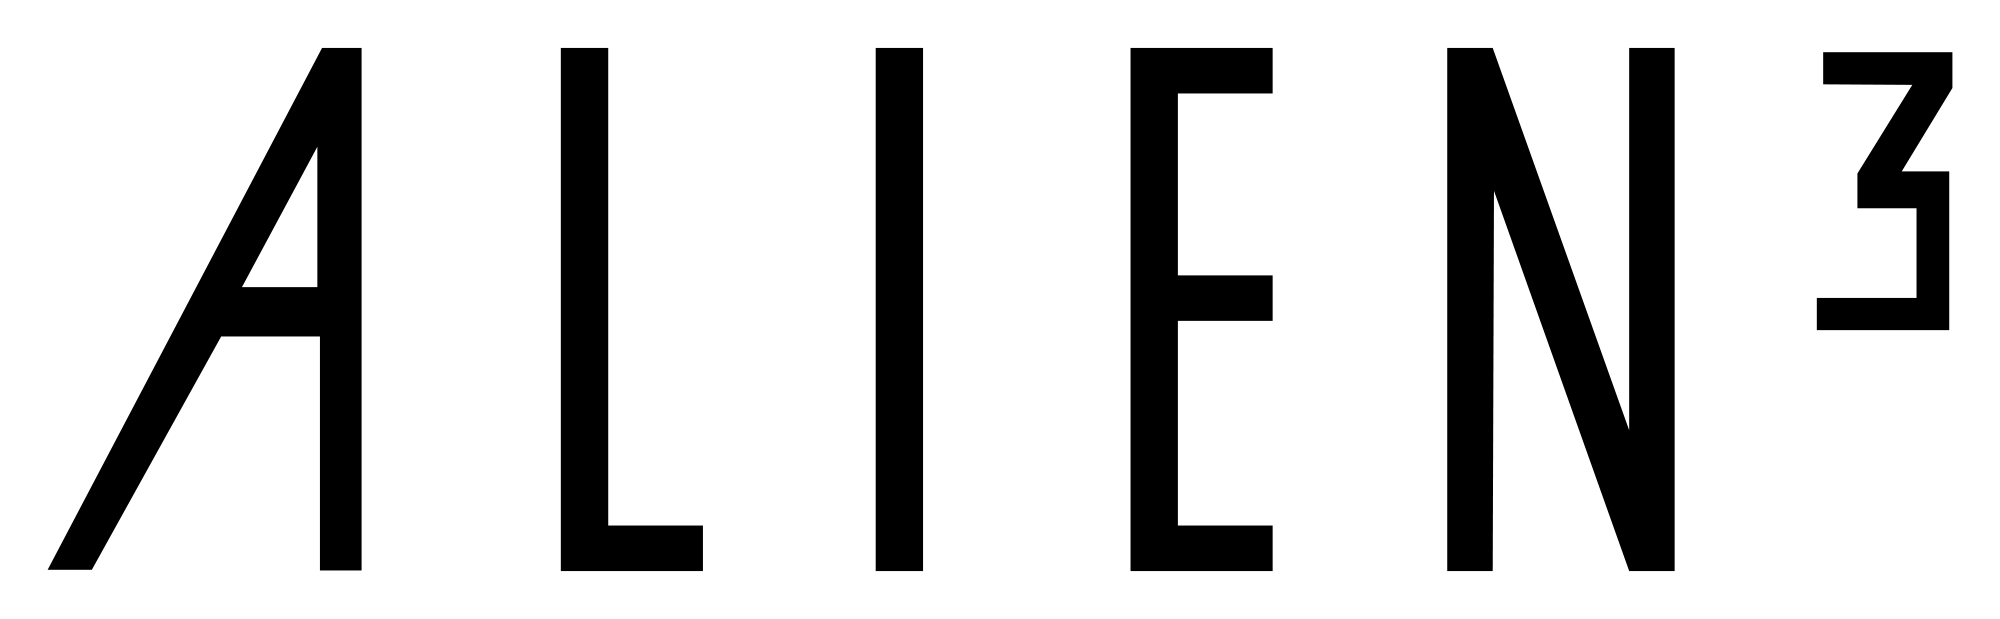 2000px-Alien_3_Logo.svg